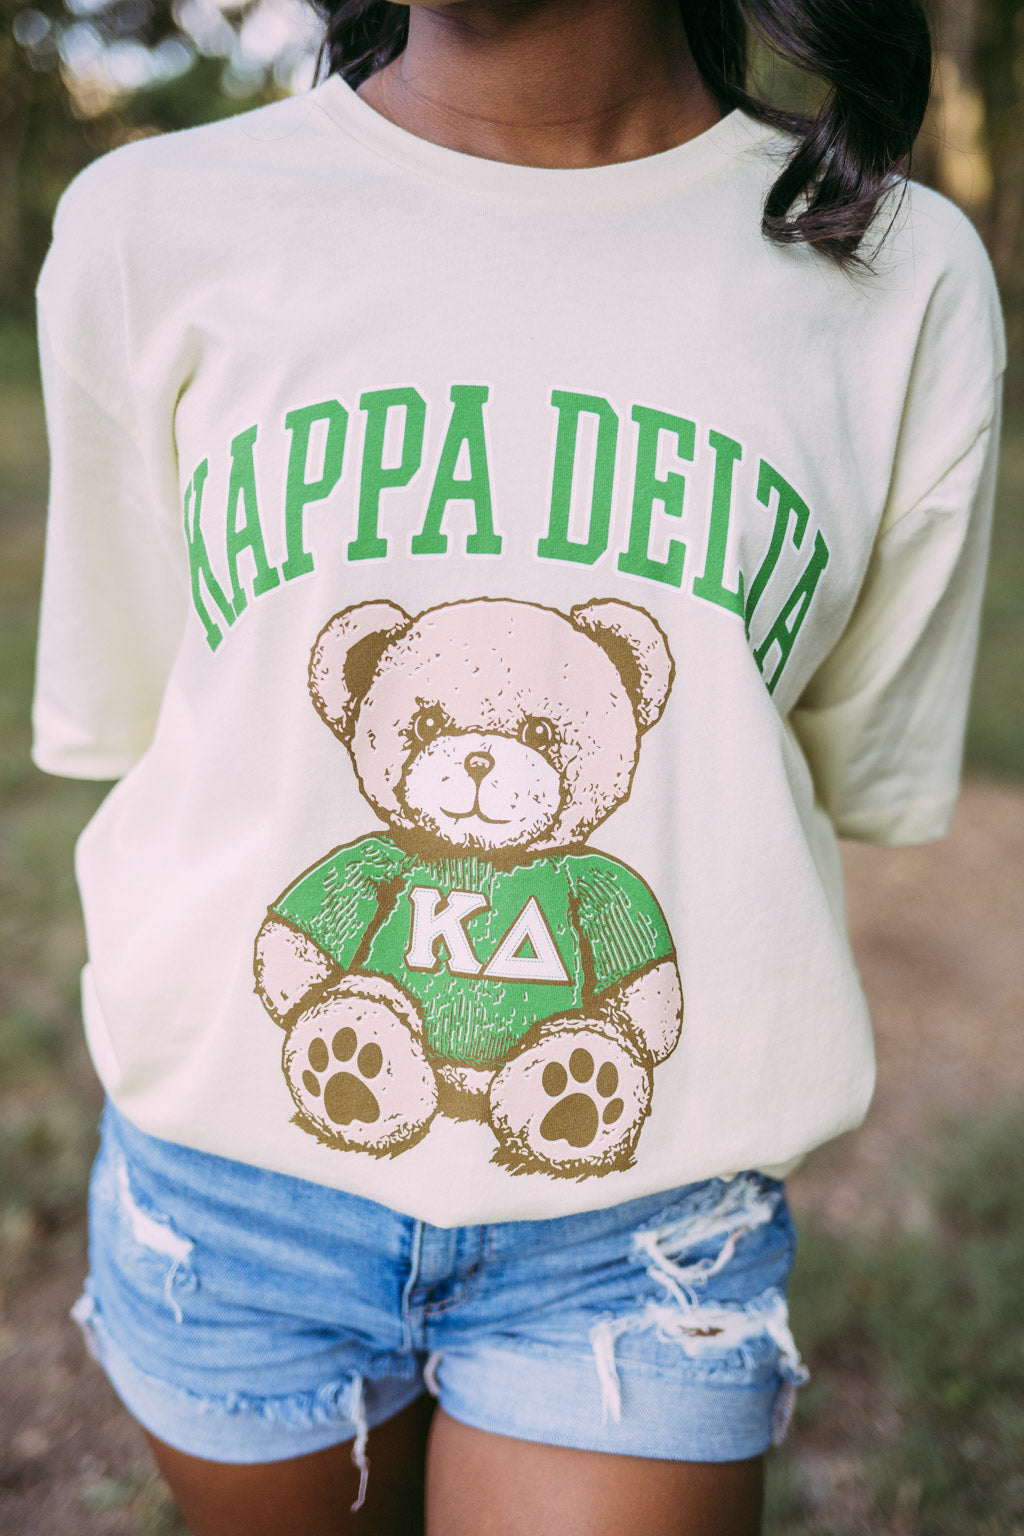 Kappa Delta Teddy Bear Tshirt